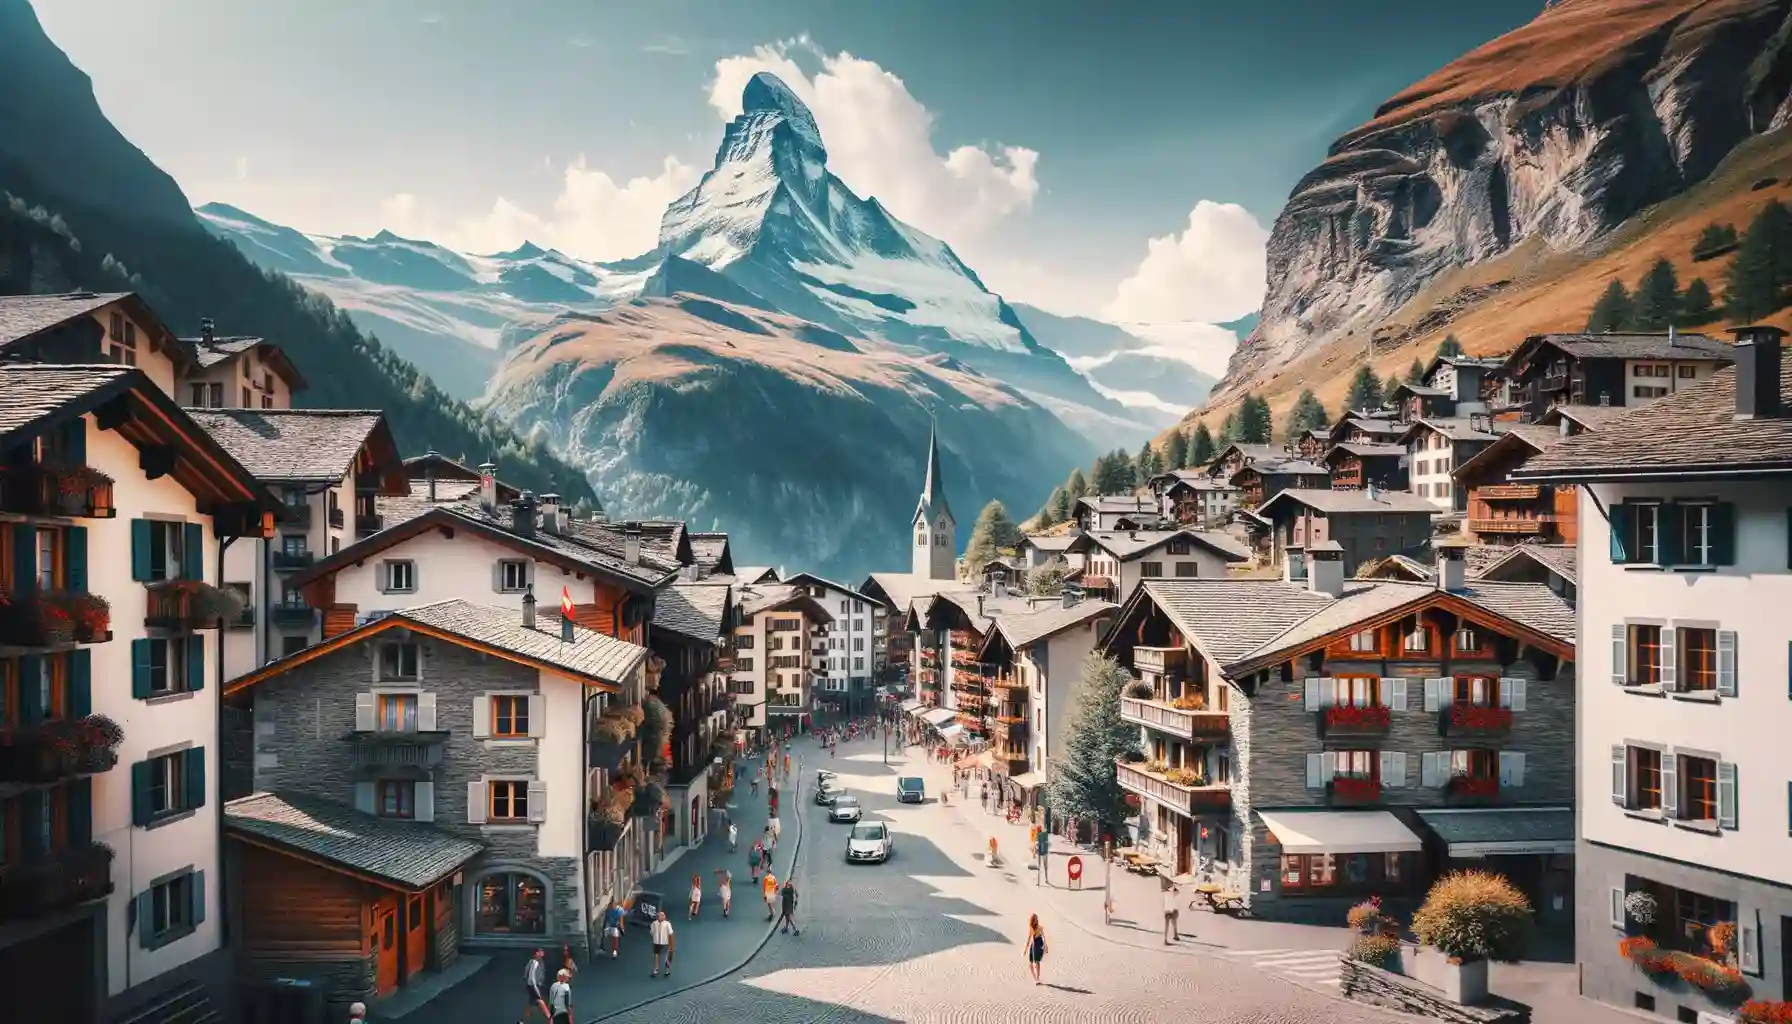 The enchanting town of Zermatt